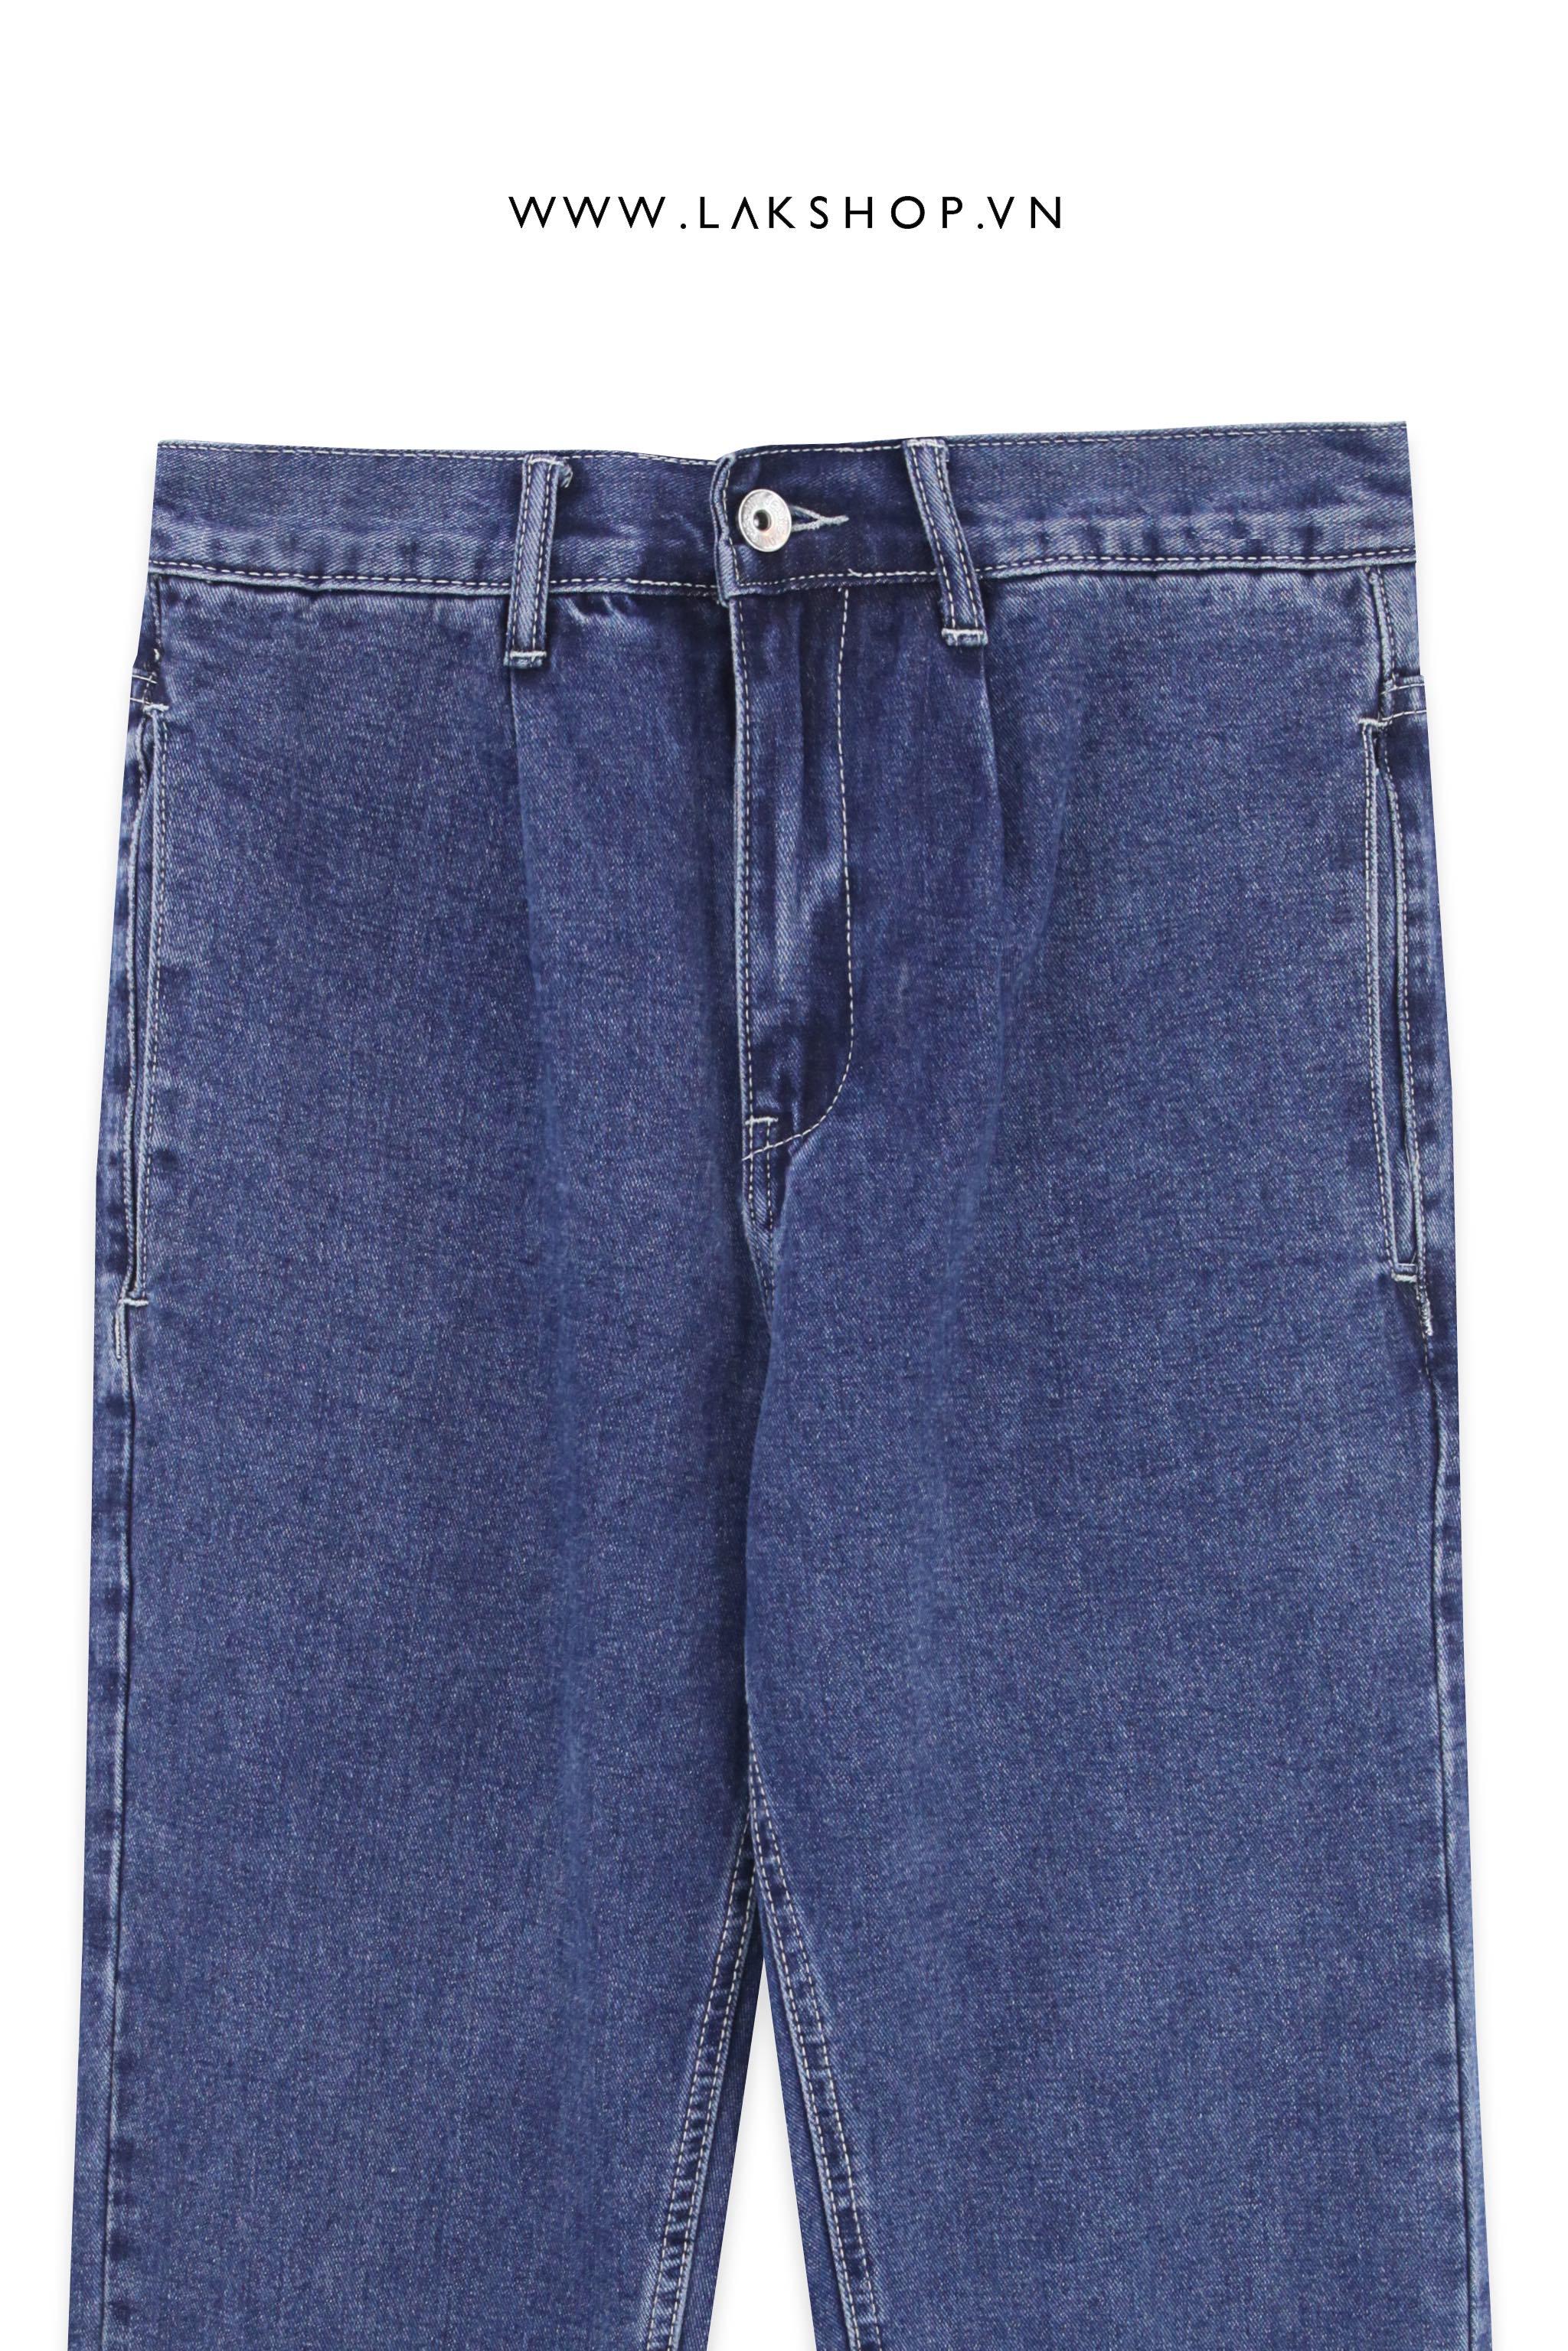 Tapered Slim Fit Jeans in Dark Blue